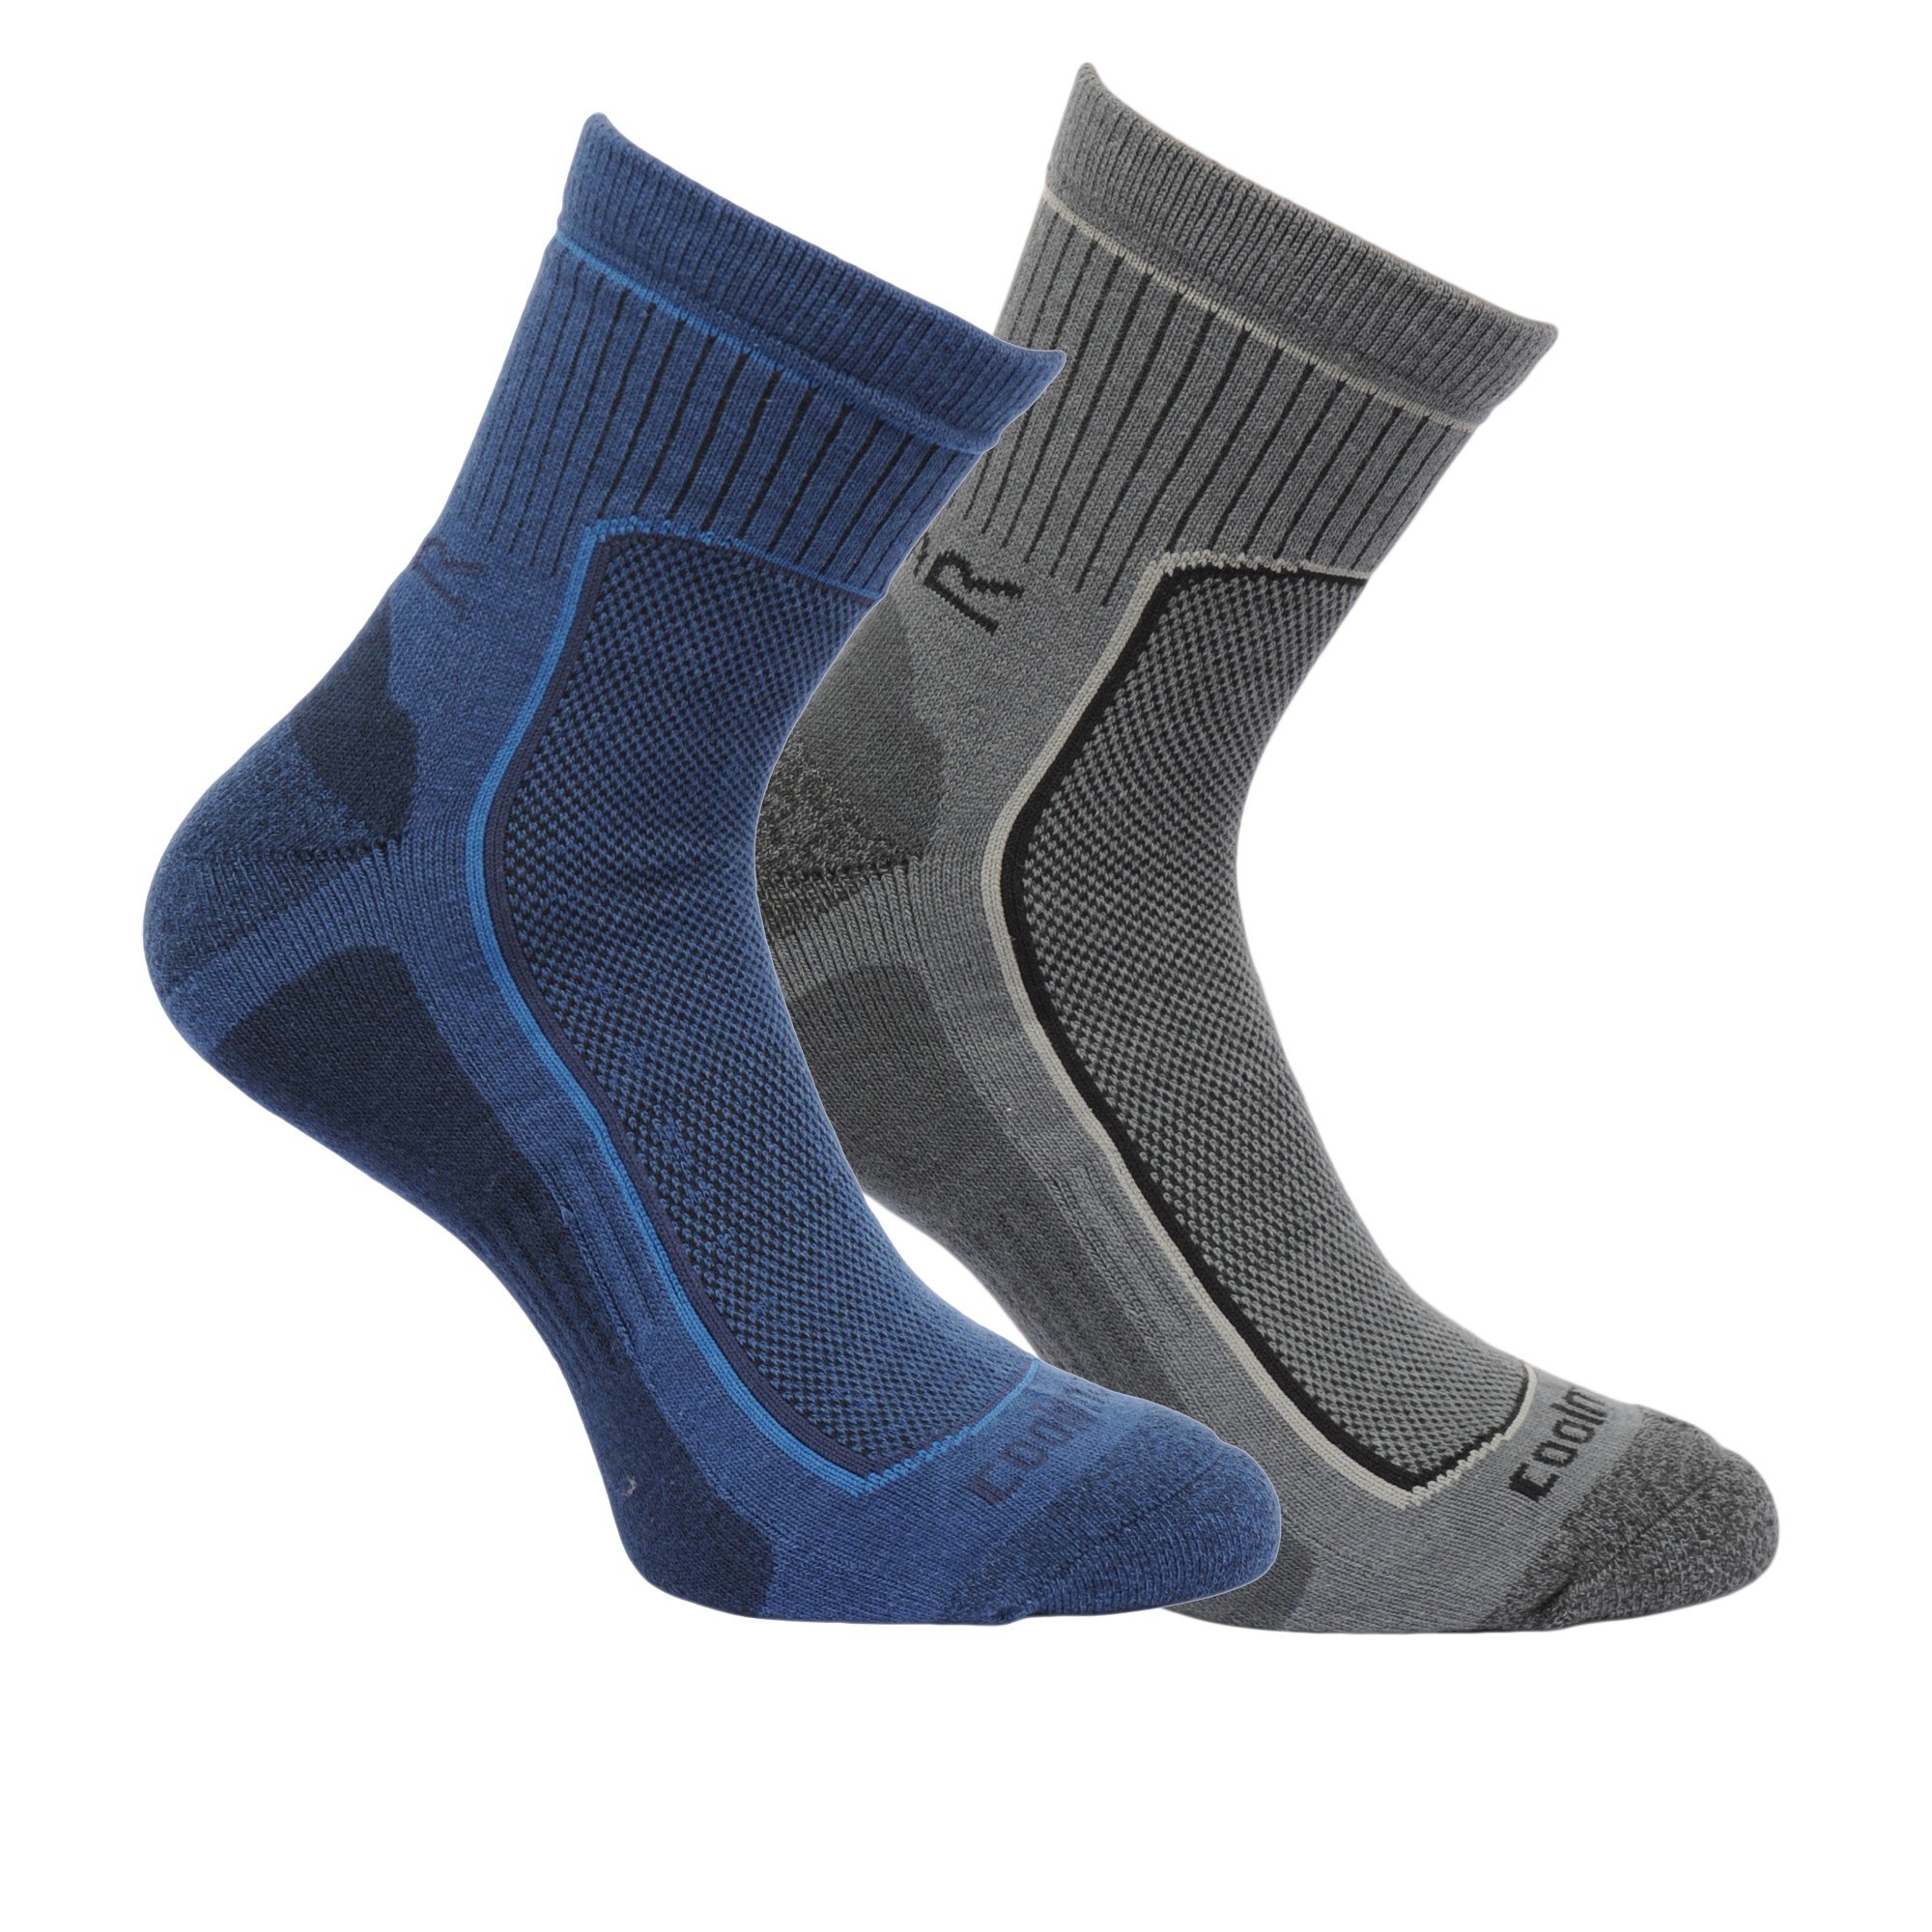 Regatta Active Lifestyle Socks Twin Pack Dark Denim/Granite Size 9-12